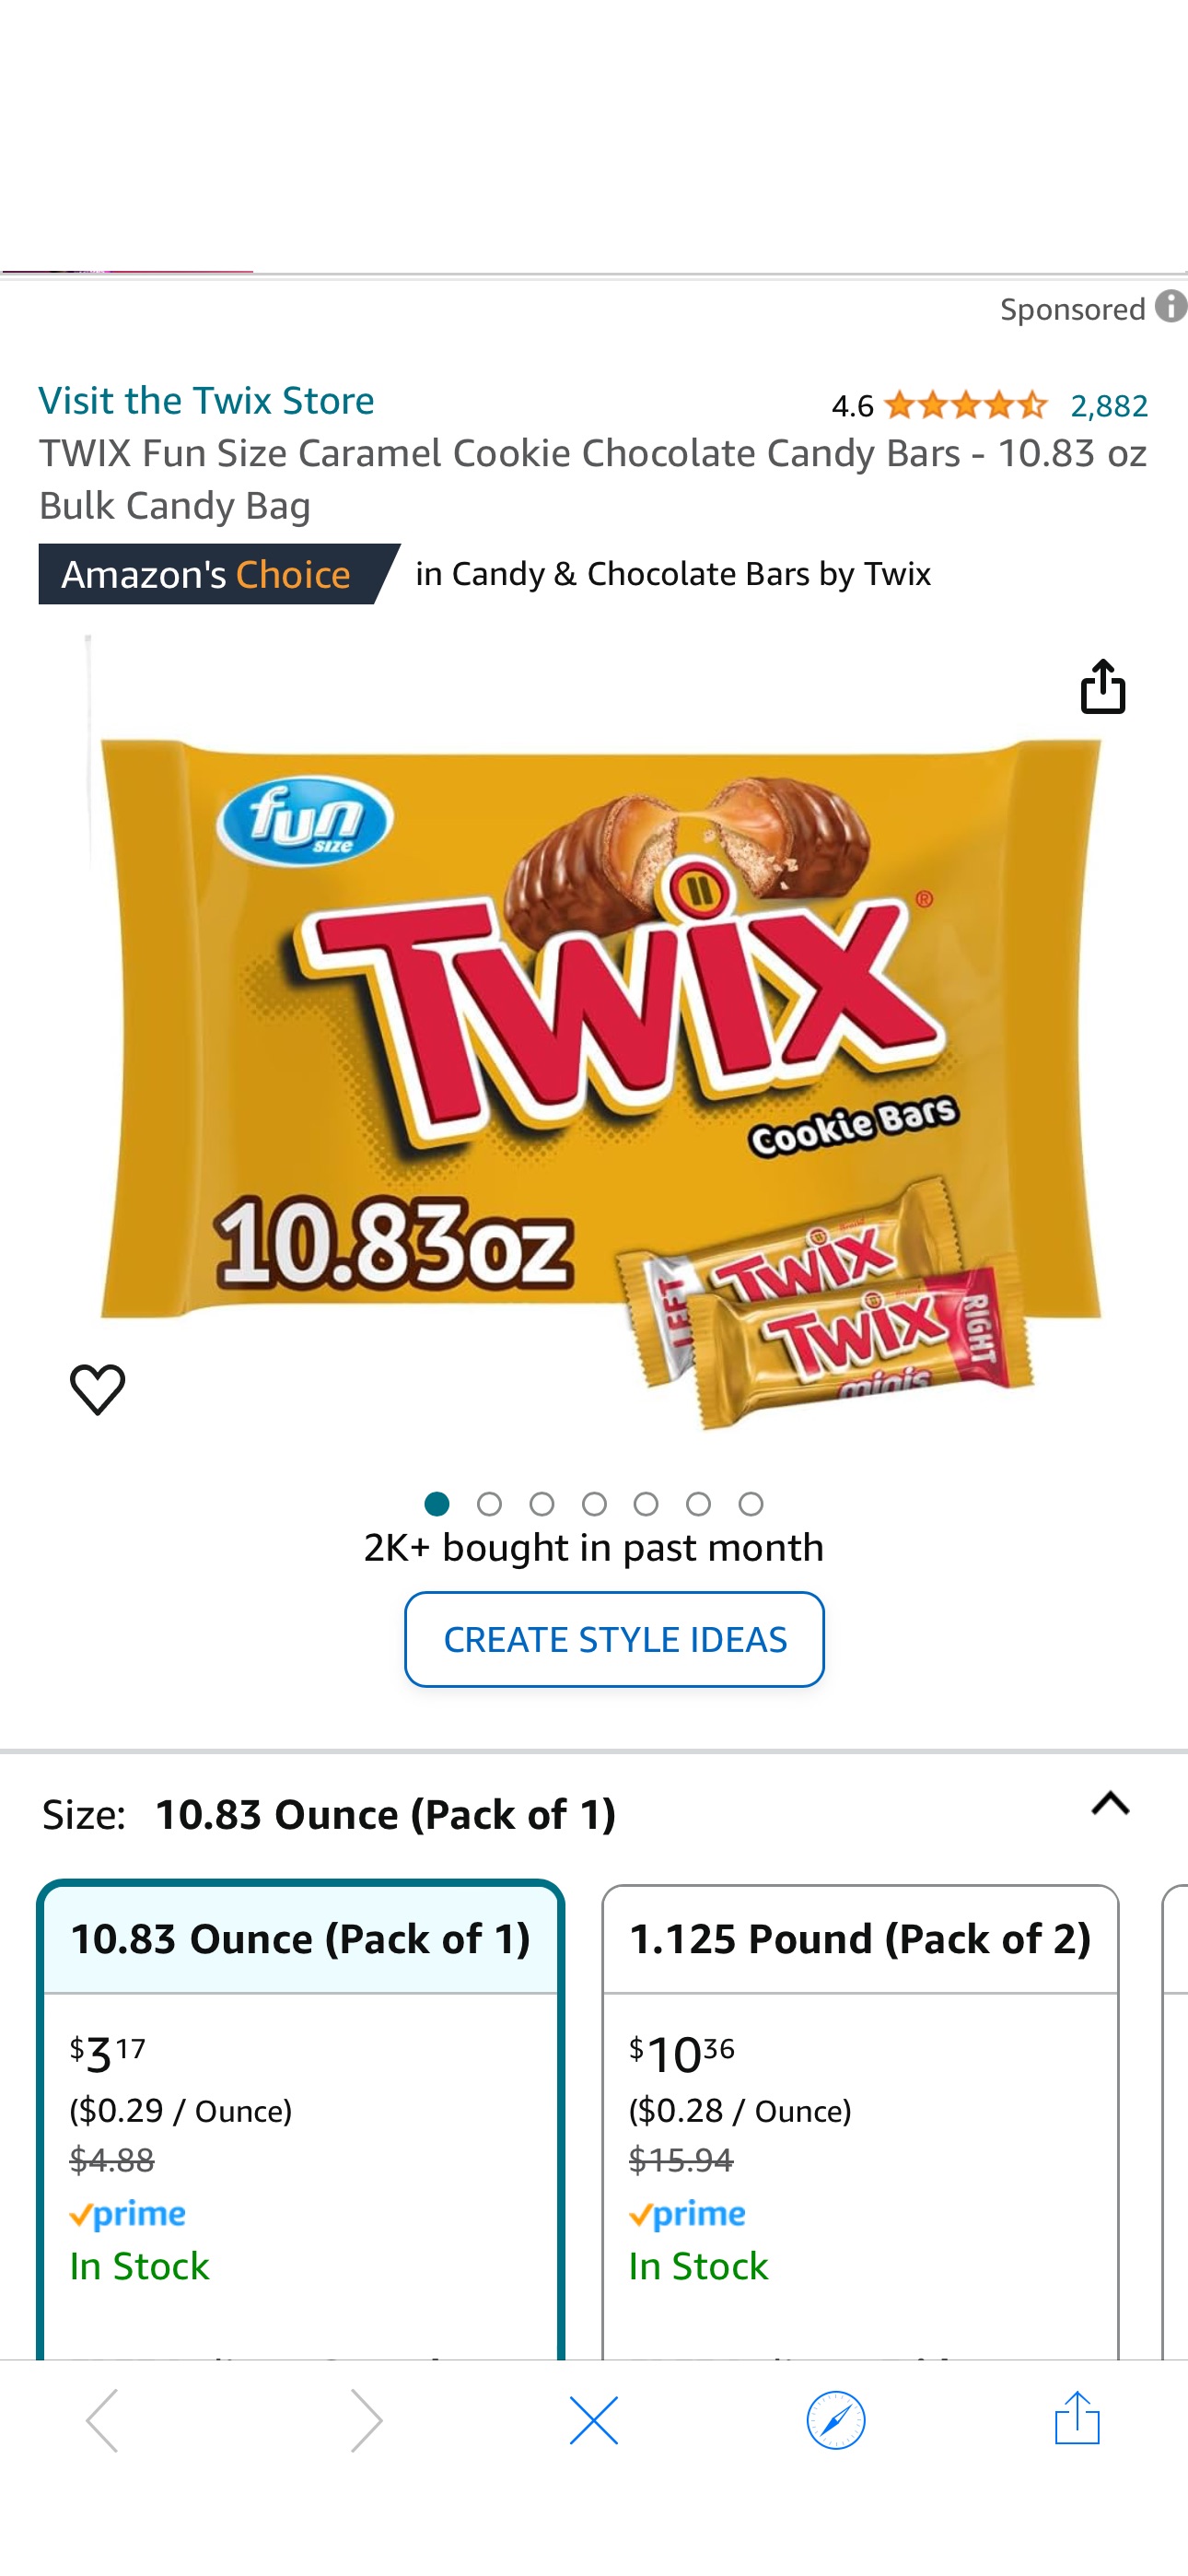 Amazon.com : TWIX Fun Size Caramel Cookie Chocolate Candy Bars - 10.83 oz Bulk Candy Bag : Grocery & Gourmet Food